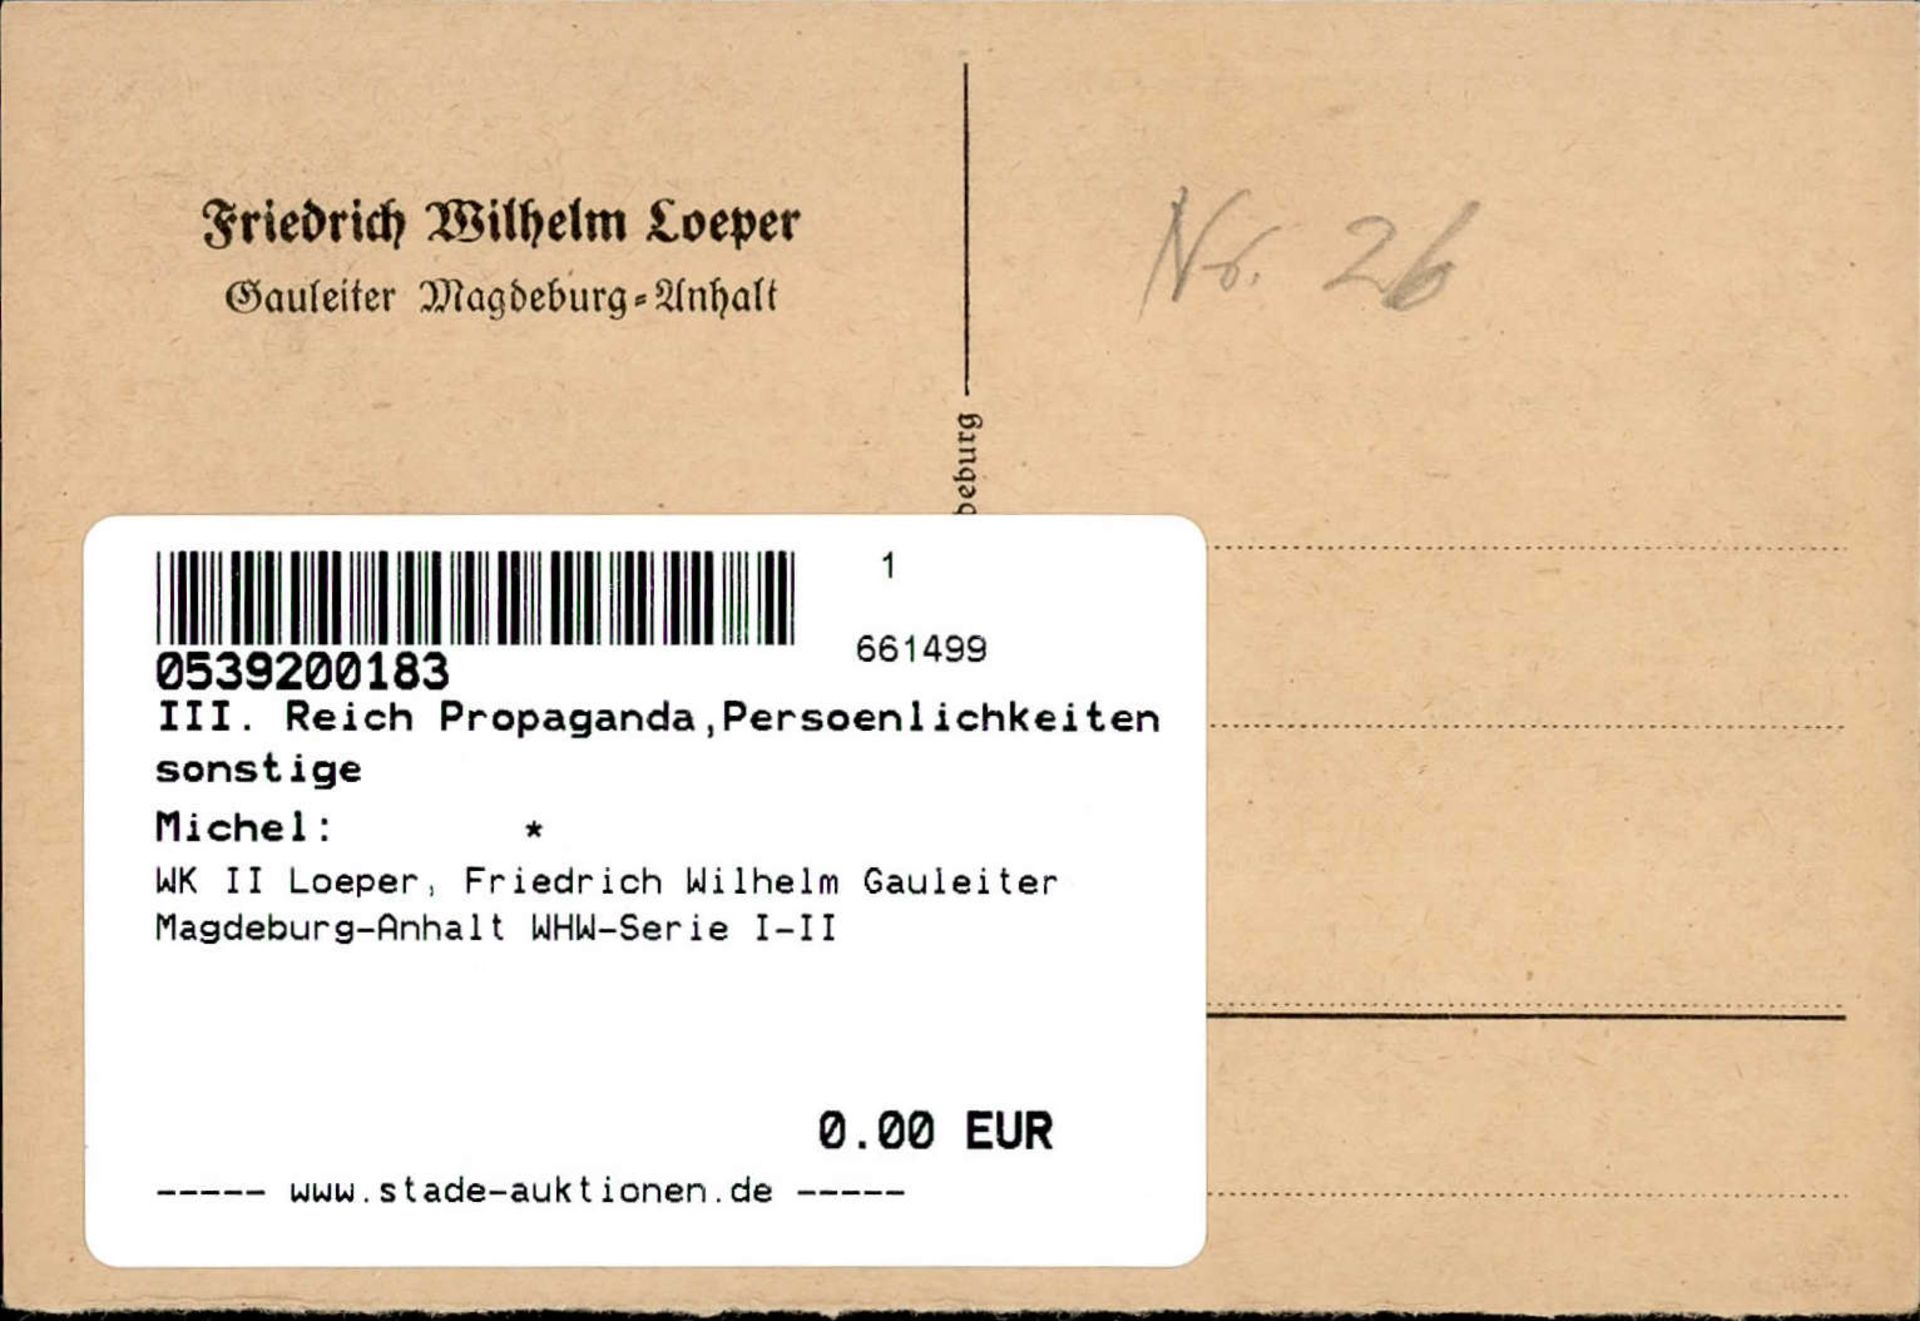 WK II Loeper, Friedrich Wilhelm Gauleiter Magdeburg-Anhalt WHW-Serie I-II - Image 2 of 2